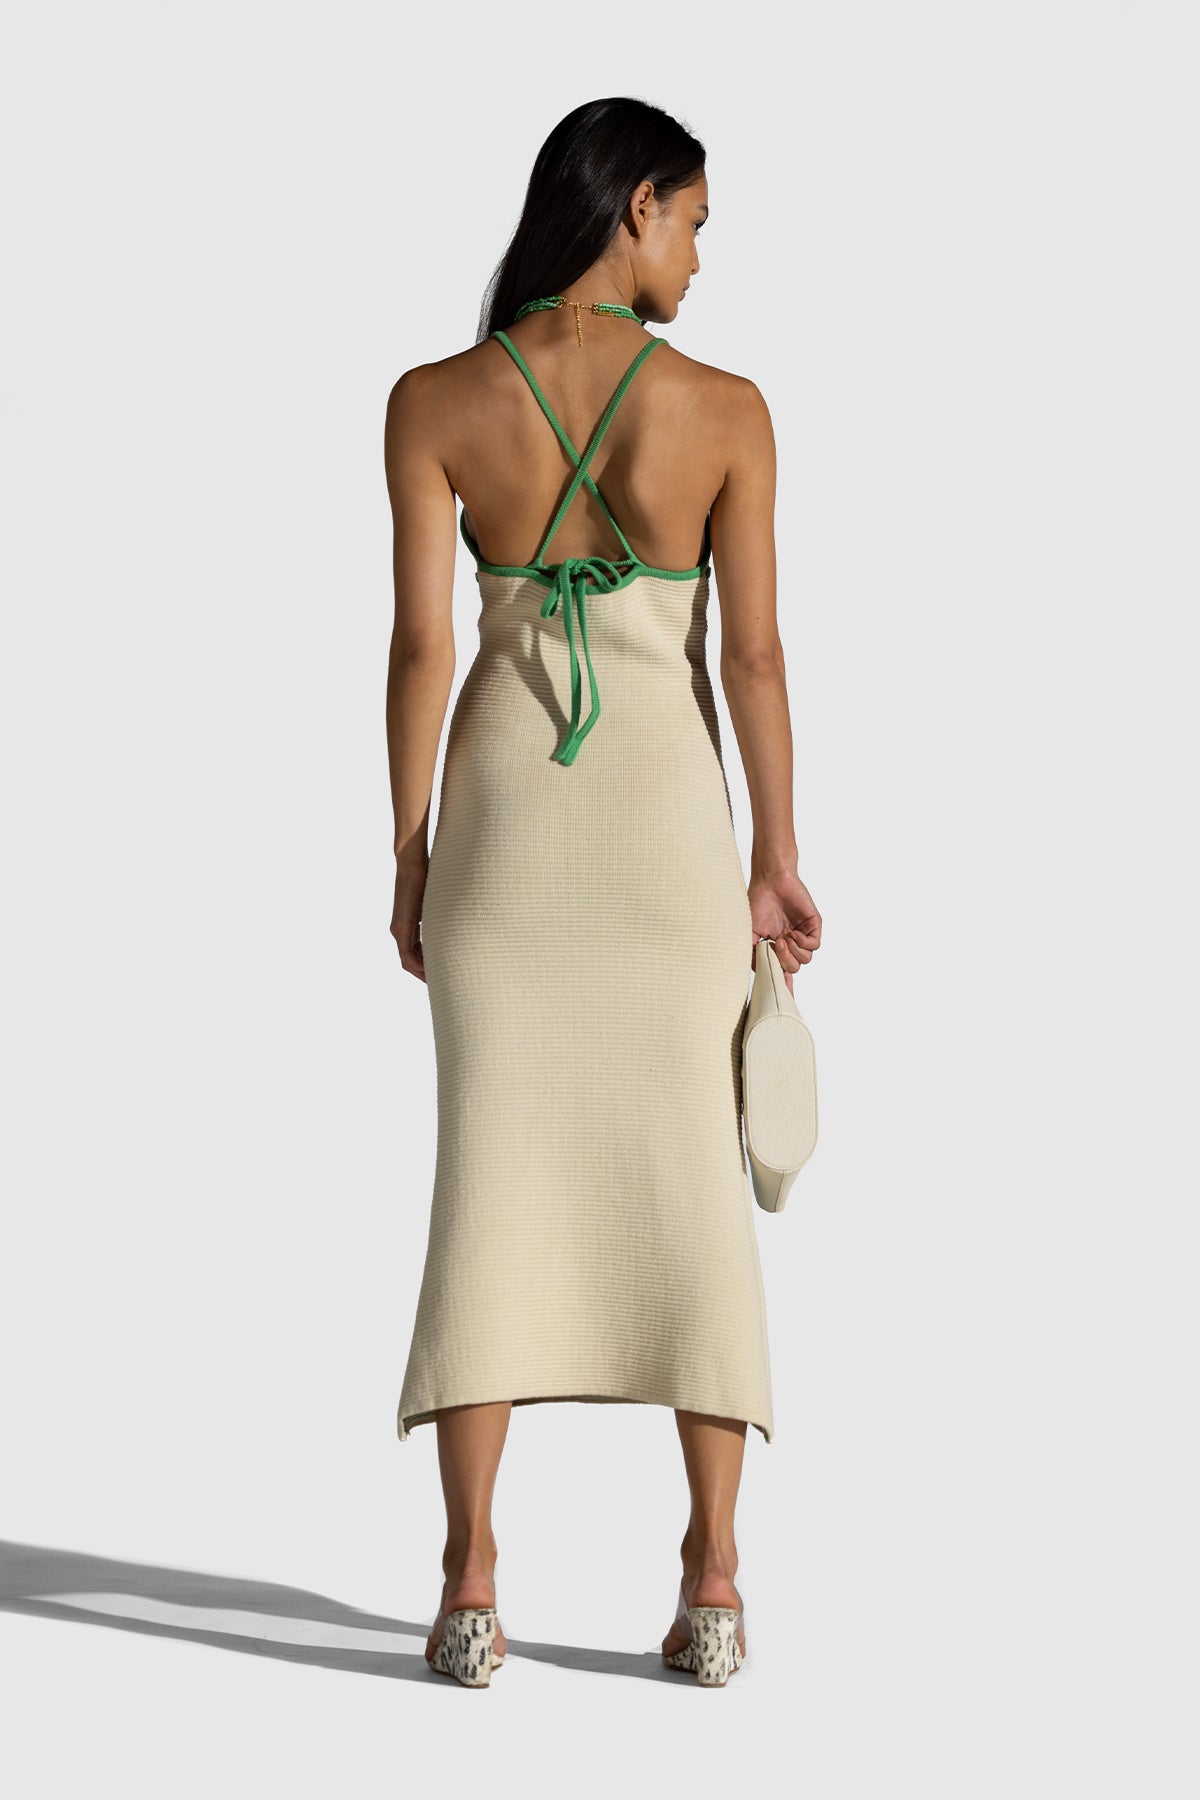 Hibiscus Knit Dress - Ivory